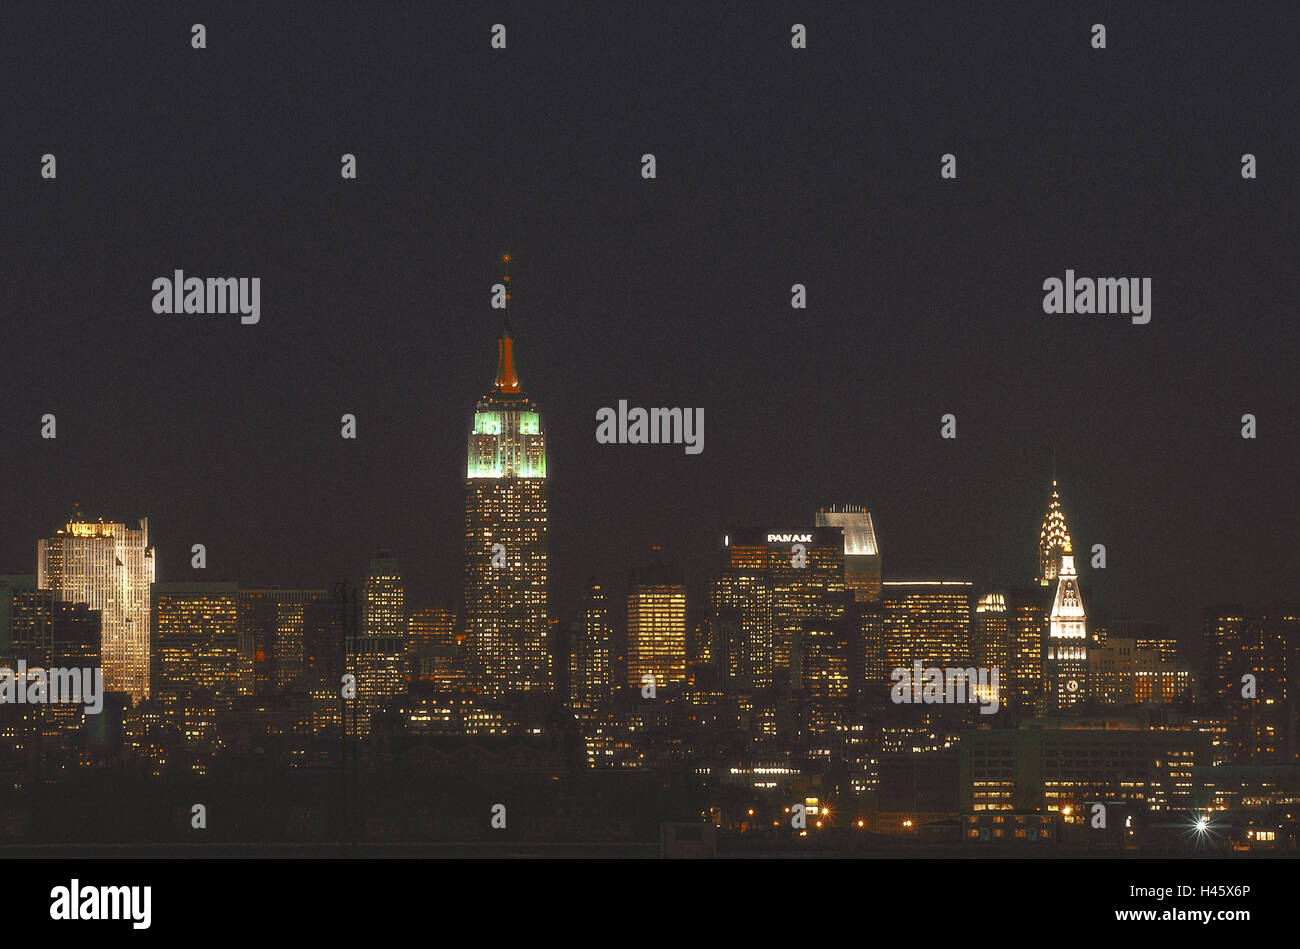 The USA, New York city, skyline, night, darkness, illuminateds, lights, Manhattan, town view, view, view, overview, Stock Photo